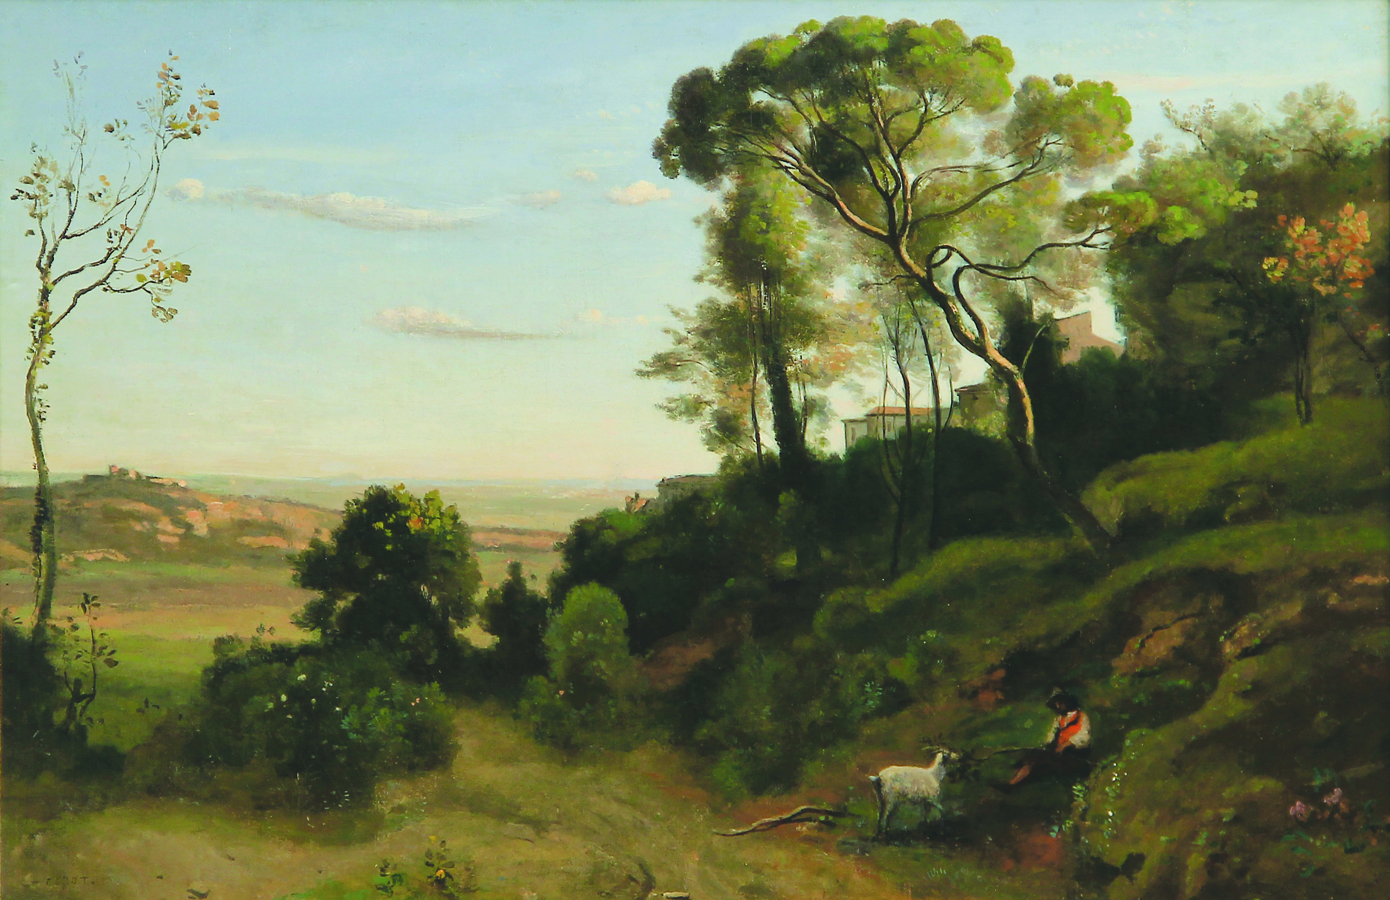 Campagne de Naples (Naples Countryside), c. 1840-45, oil on canvas, 16.5″x25″